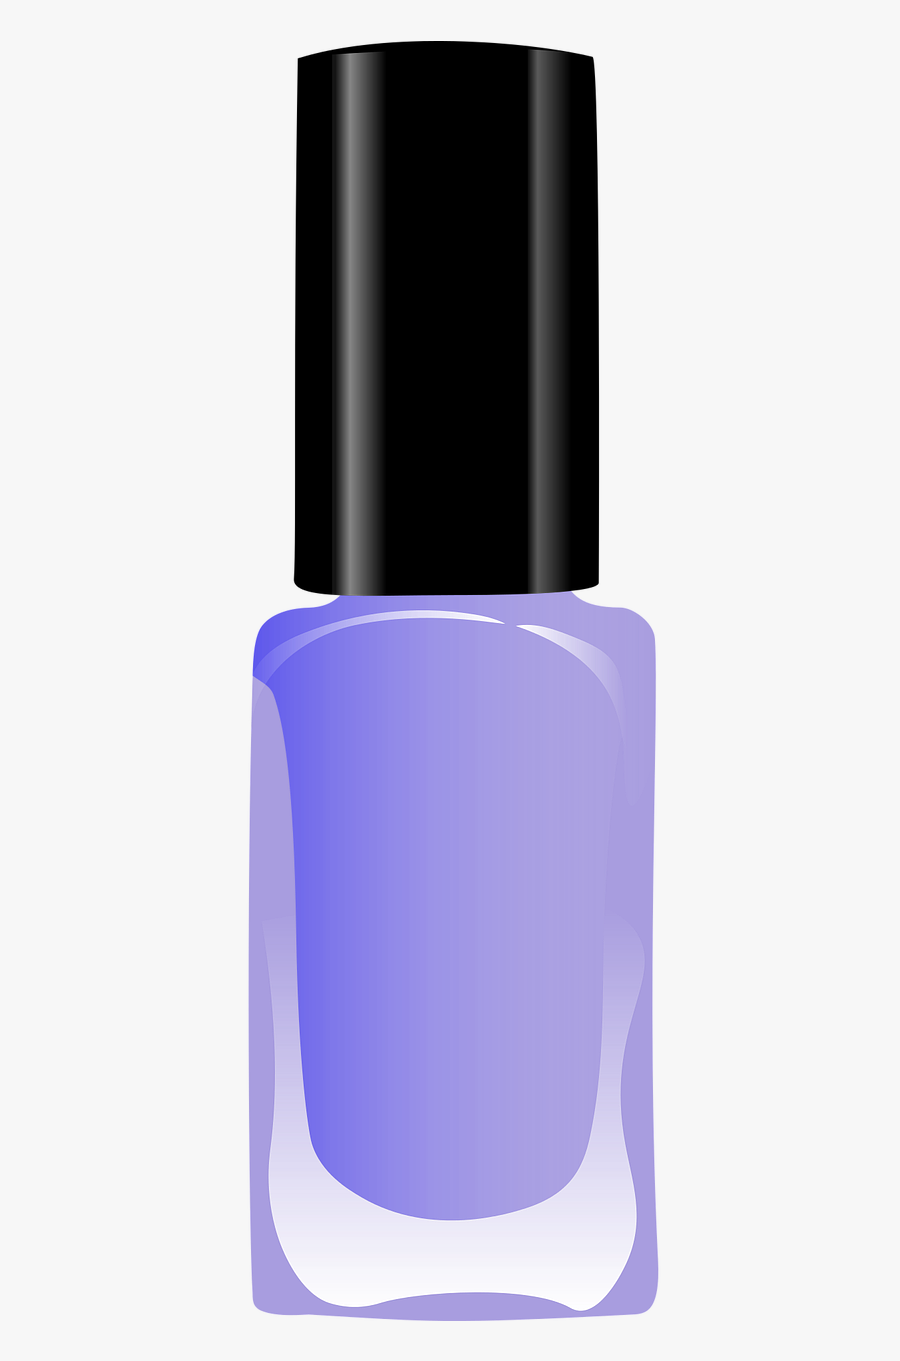 Purple Nail Polish Png, Transparent Clipart